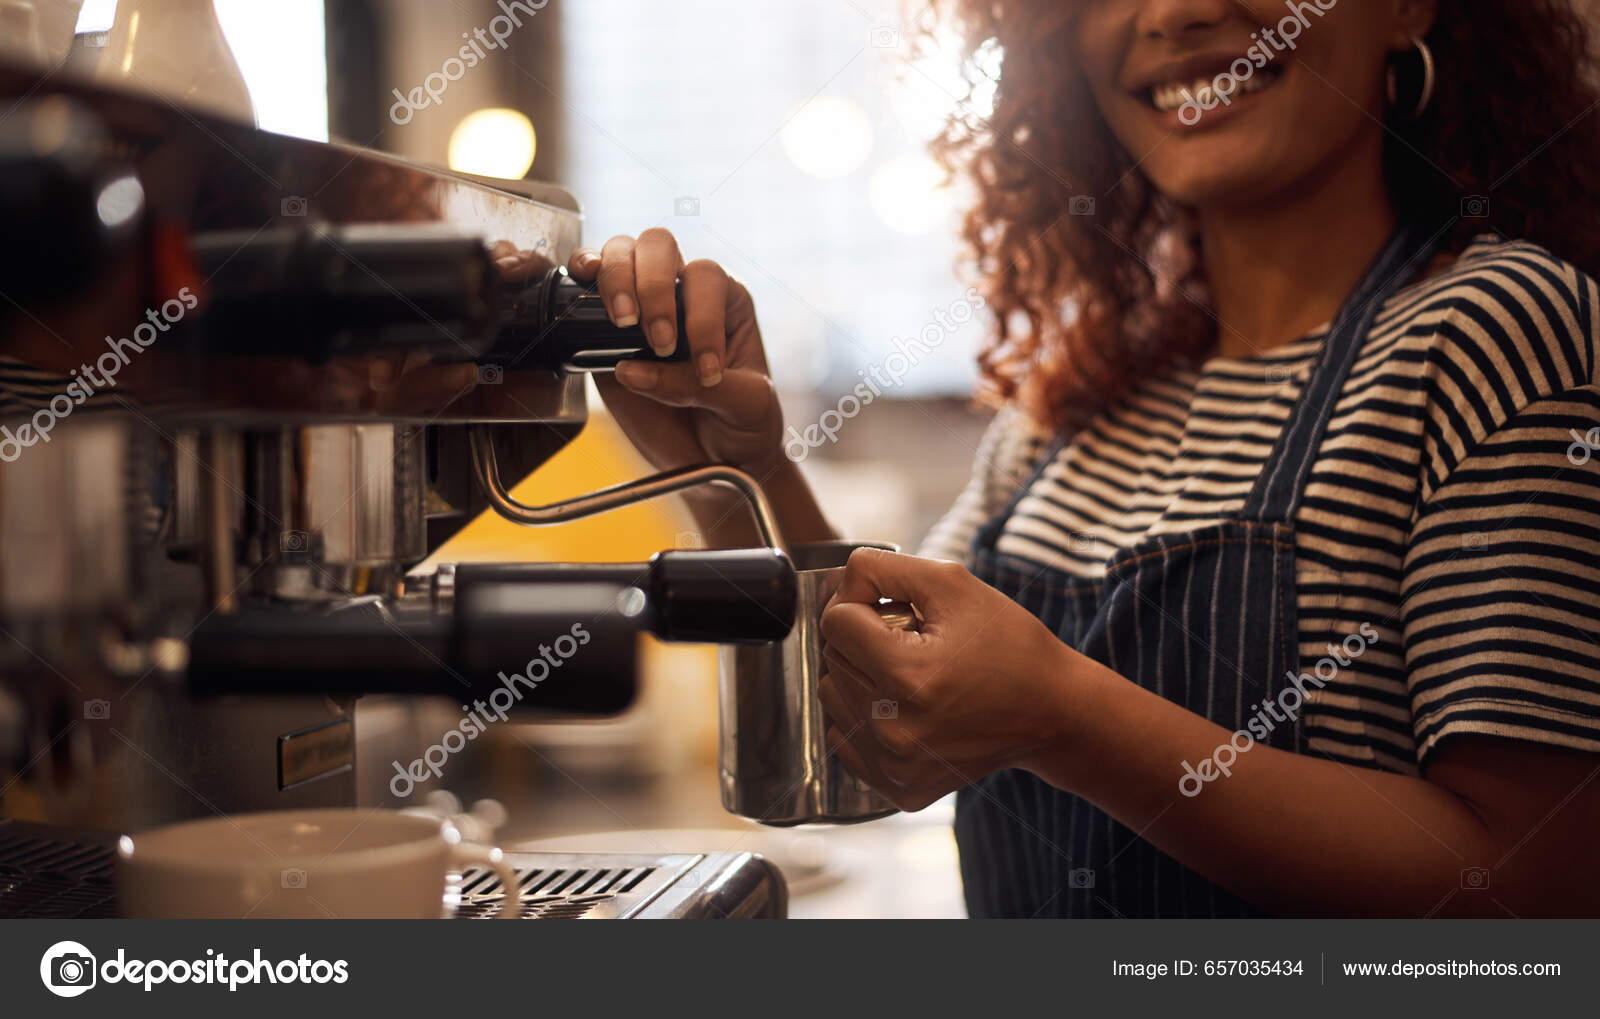 https://st5.depositphotos.com/62628780/65703/i/1600/depositphotos_657035434-stock-photo-coffee-machine-closeup-barista-steam.jpg